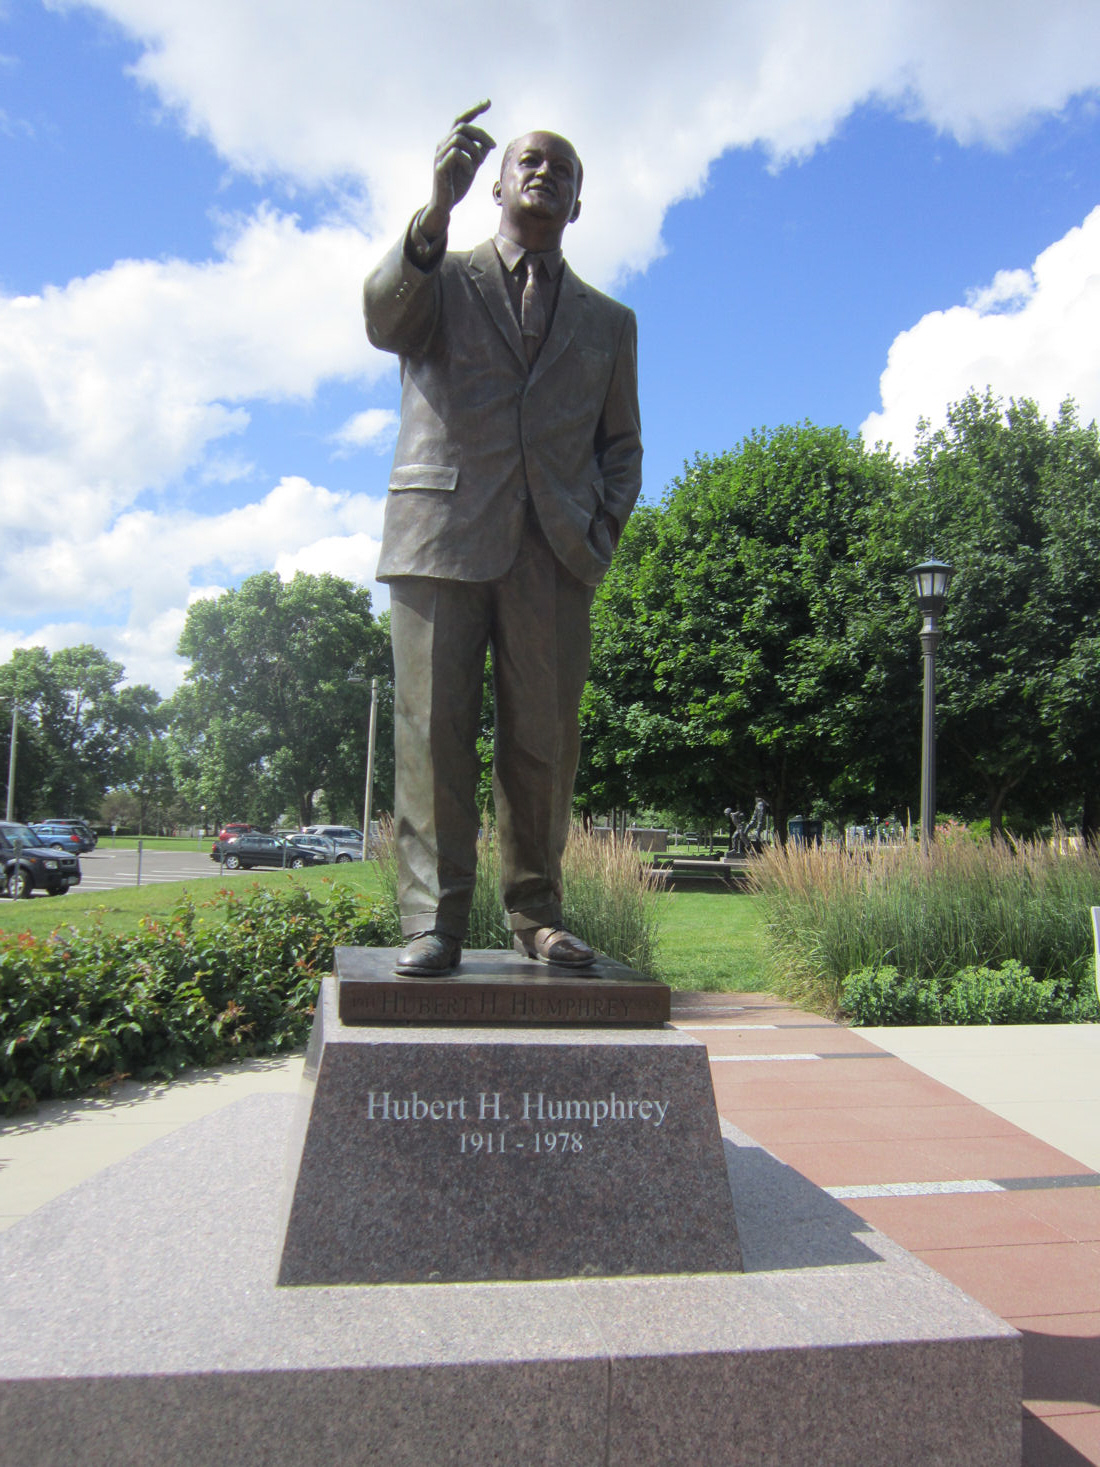 Hubert Humphrey Memorial Statue
Photo By William Fischer, Jr